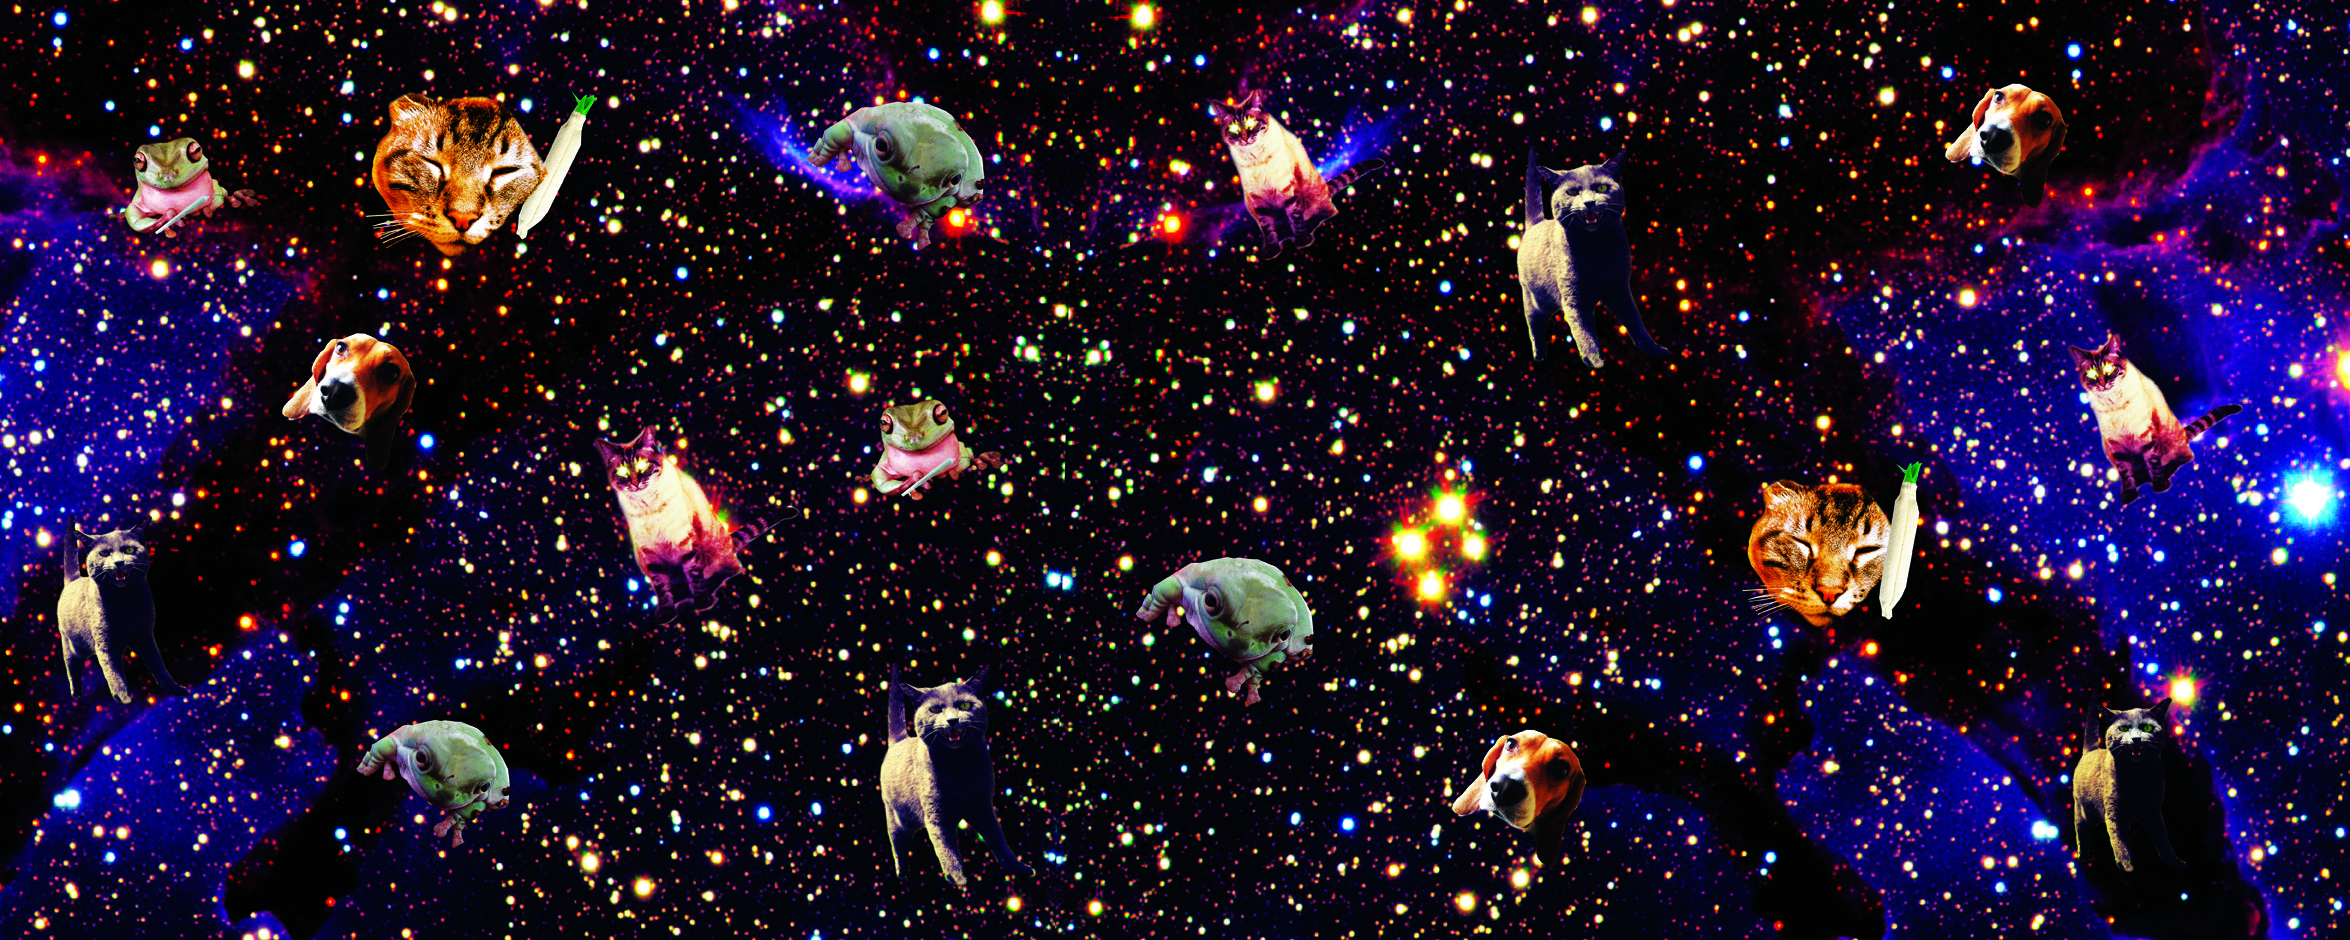 Space Kitty Wallpaper